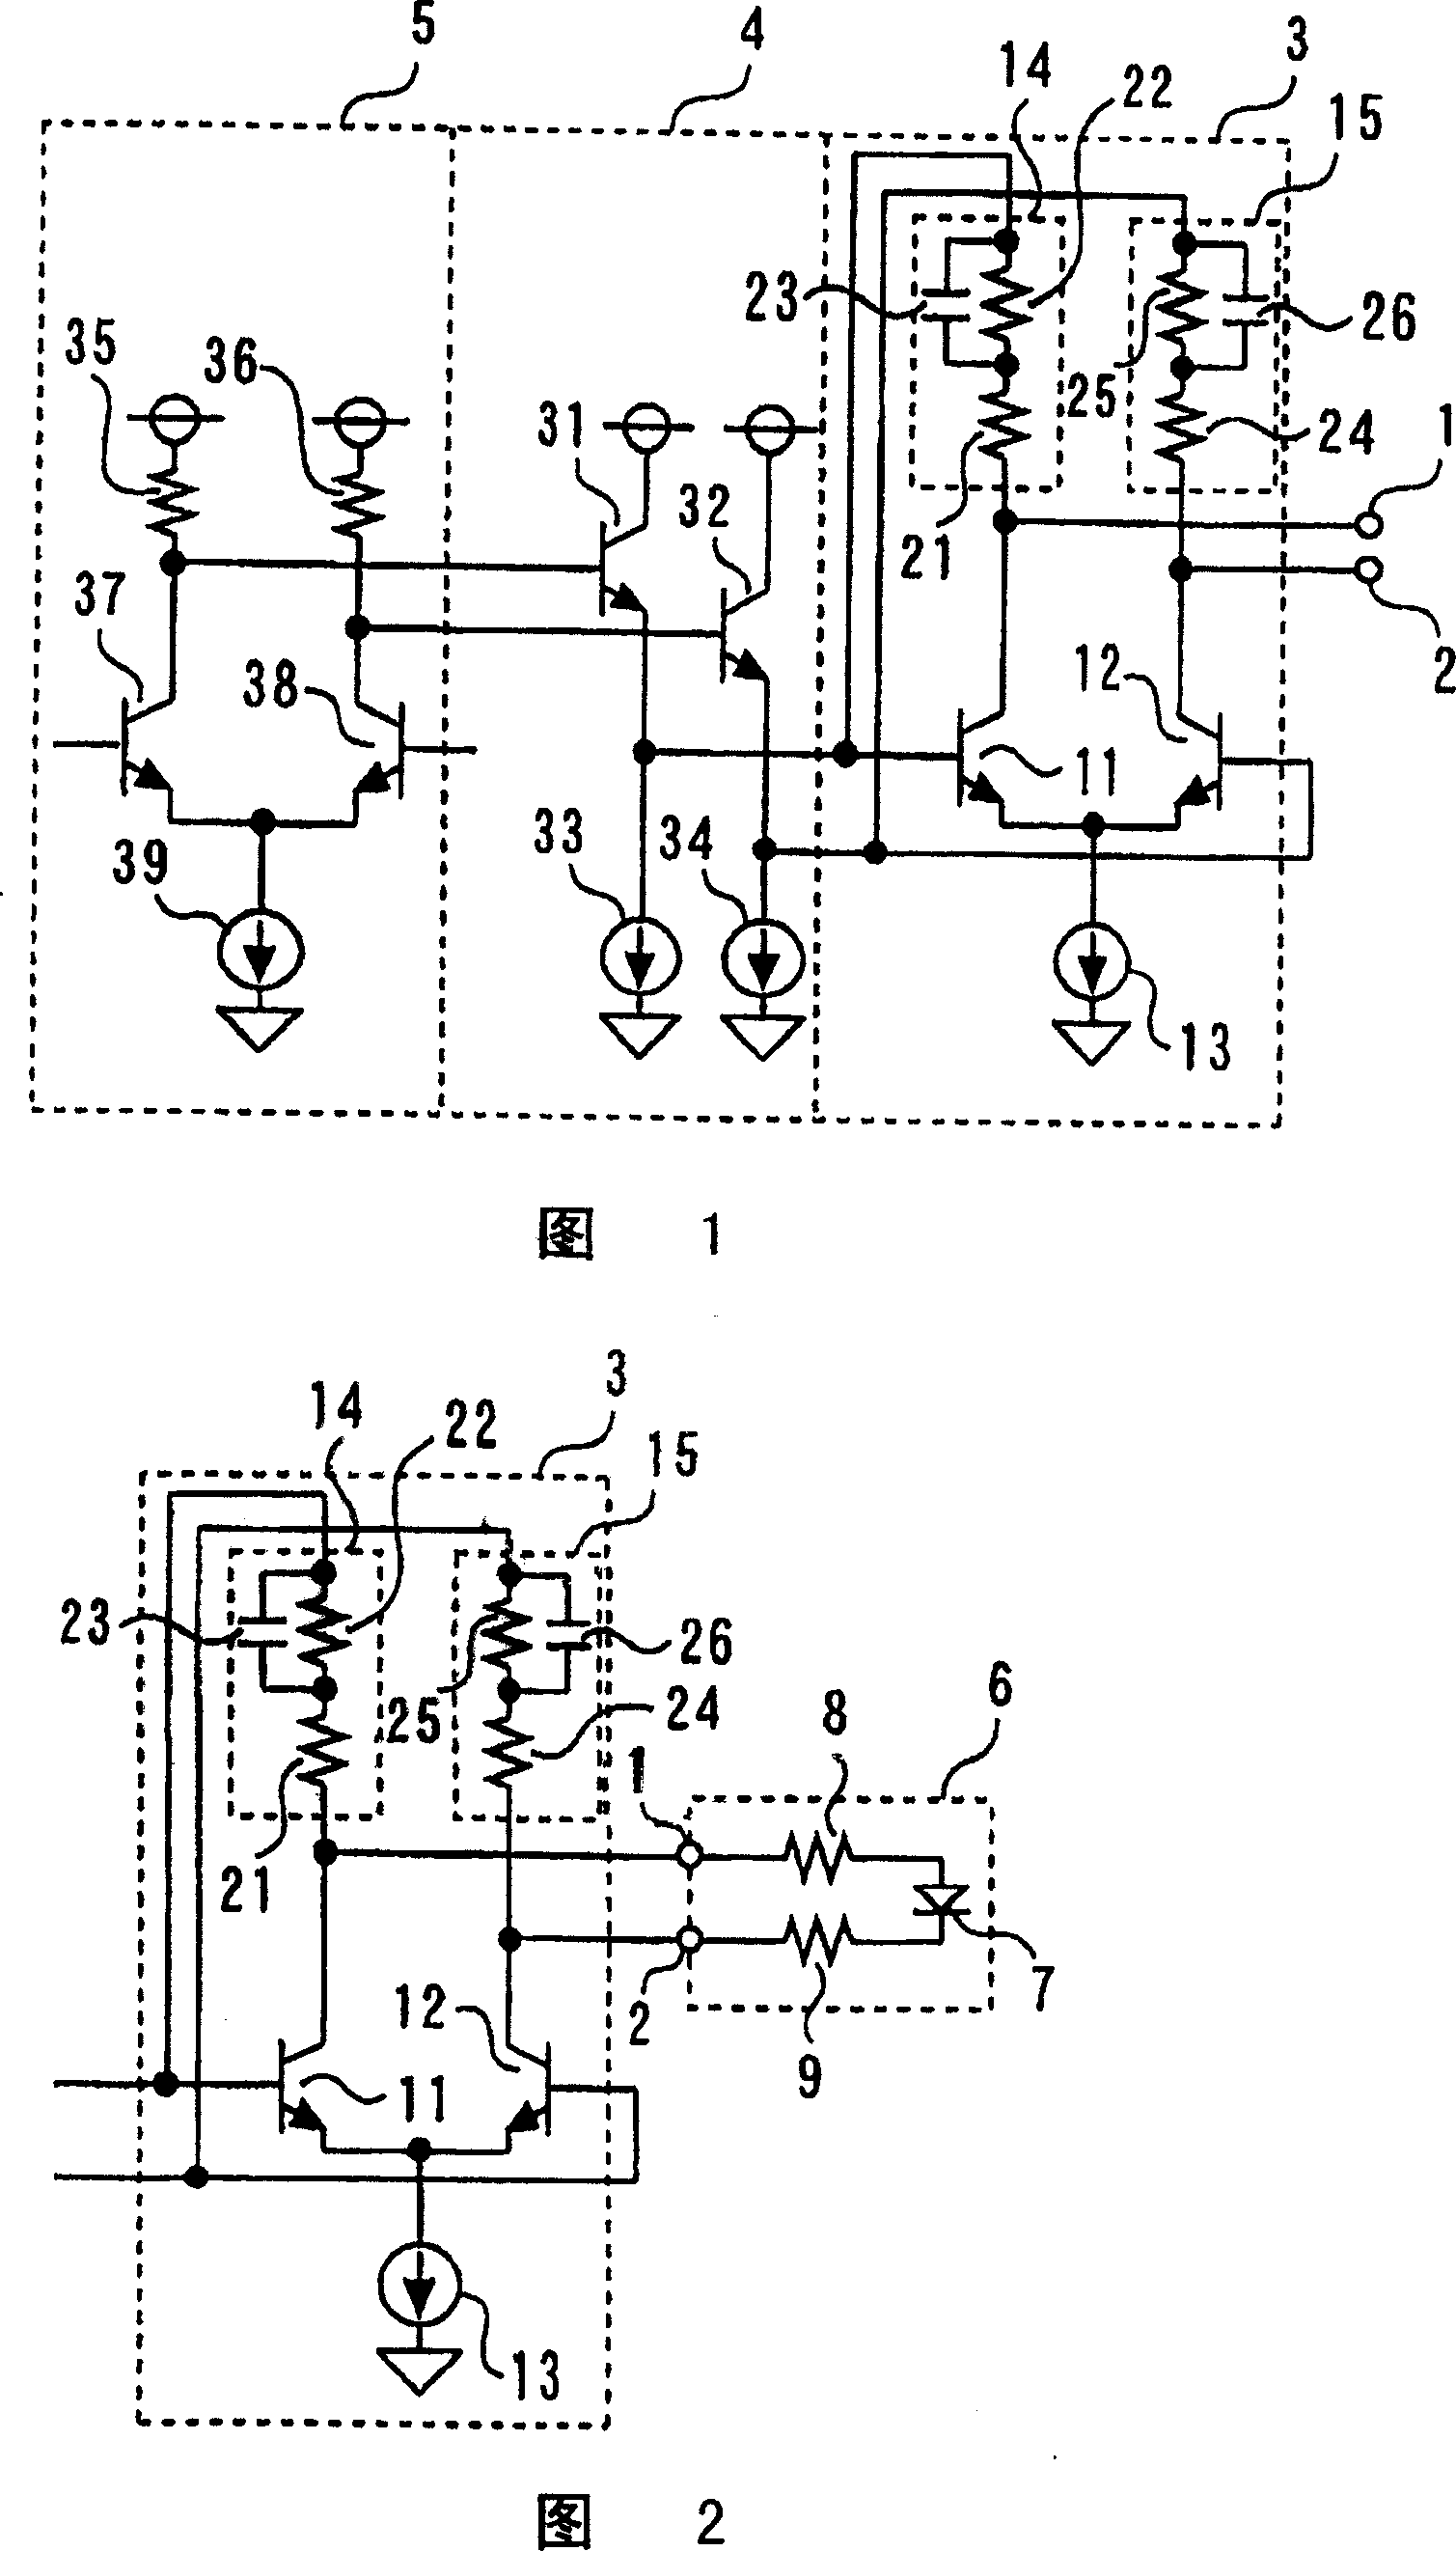 Laser diode drive circuit